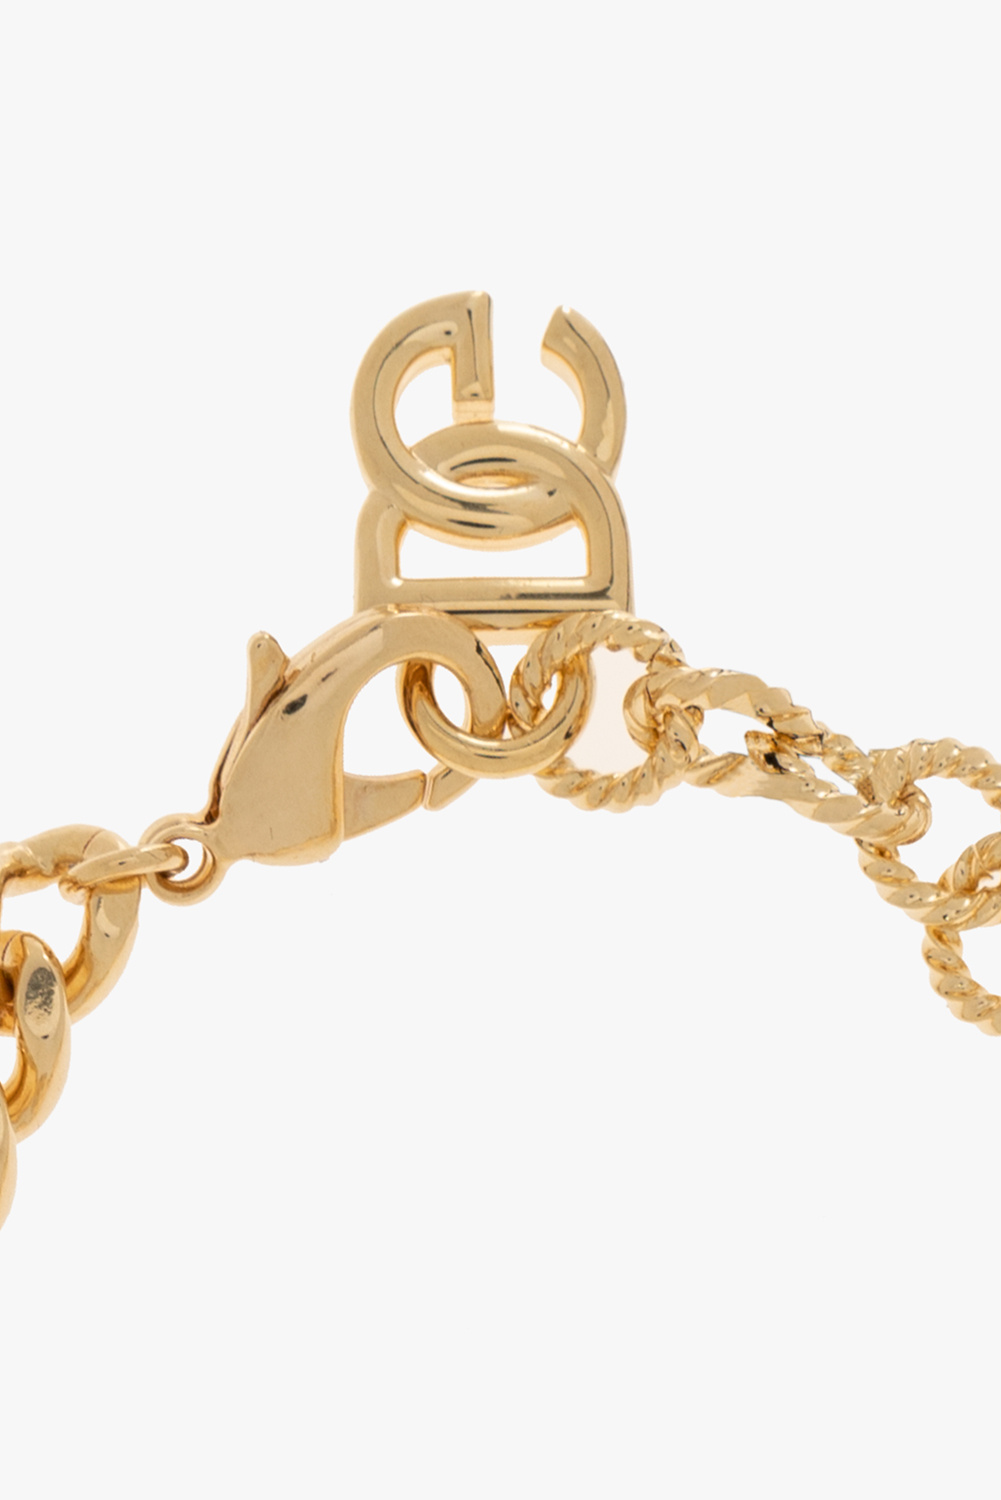 dolce platform & Gabbana Bracelet with logo